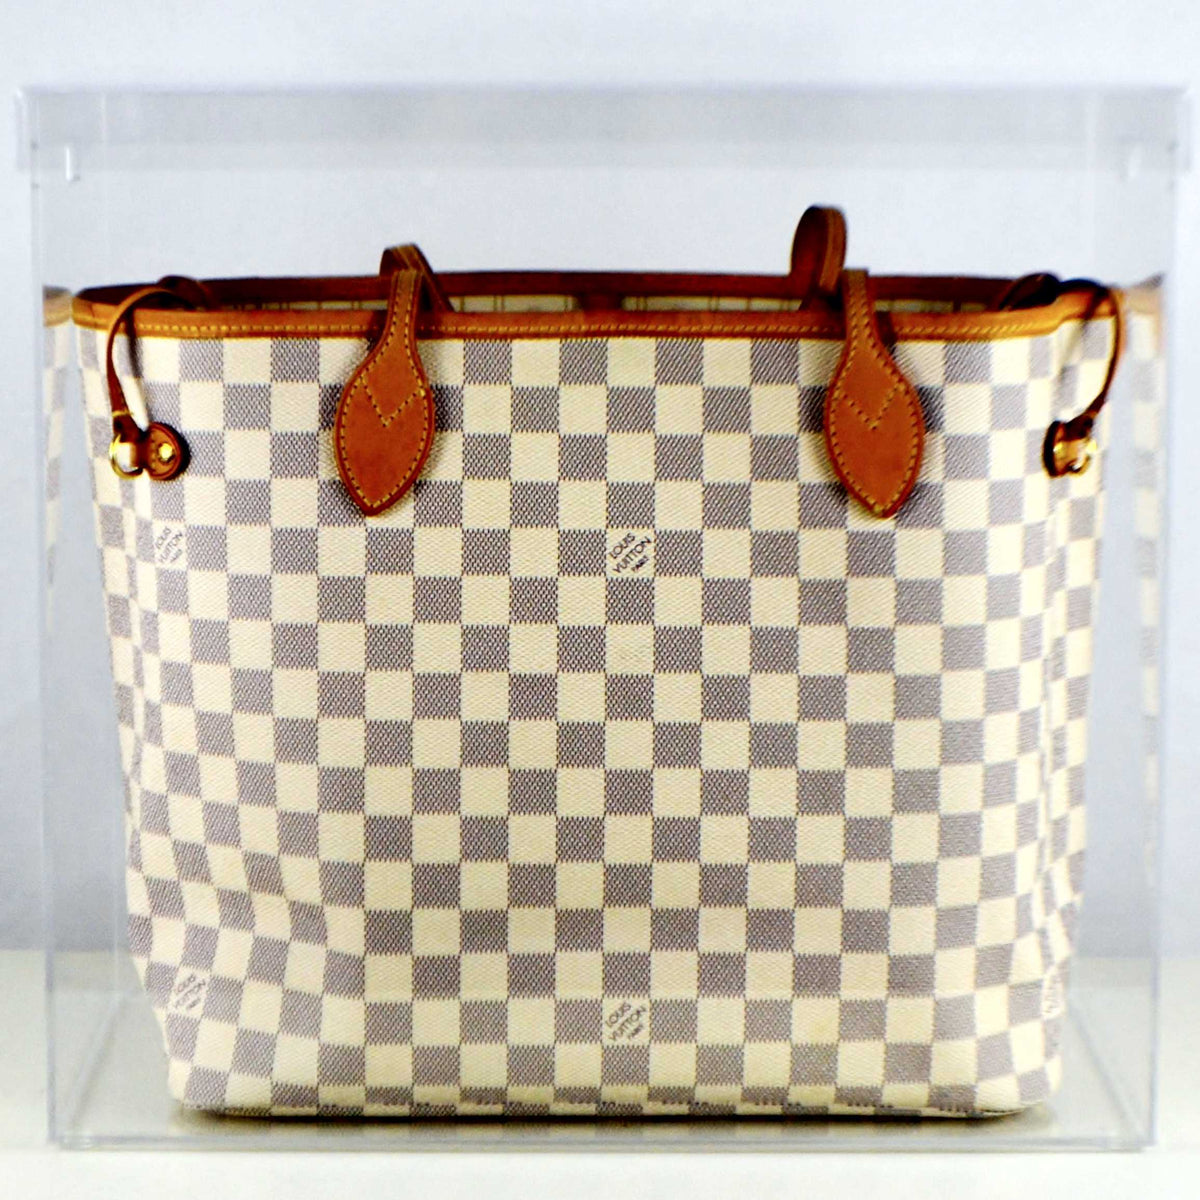 Handbag Purse Organizer for Louis Vuitton LV. We make luxury echo